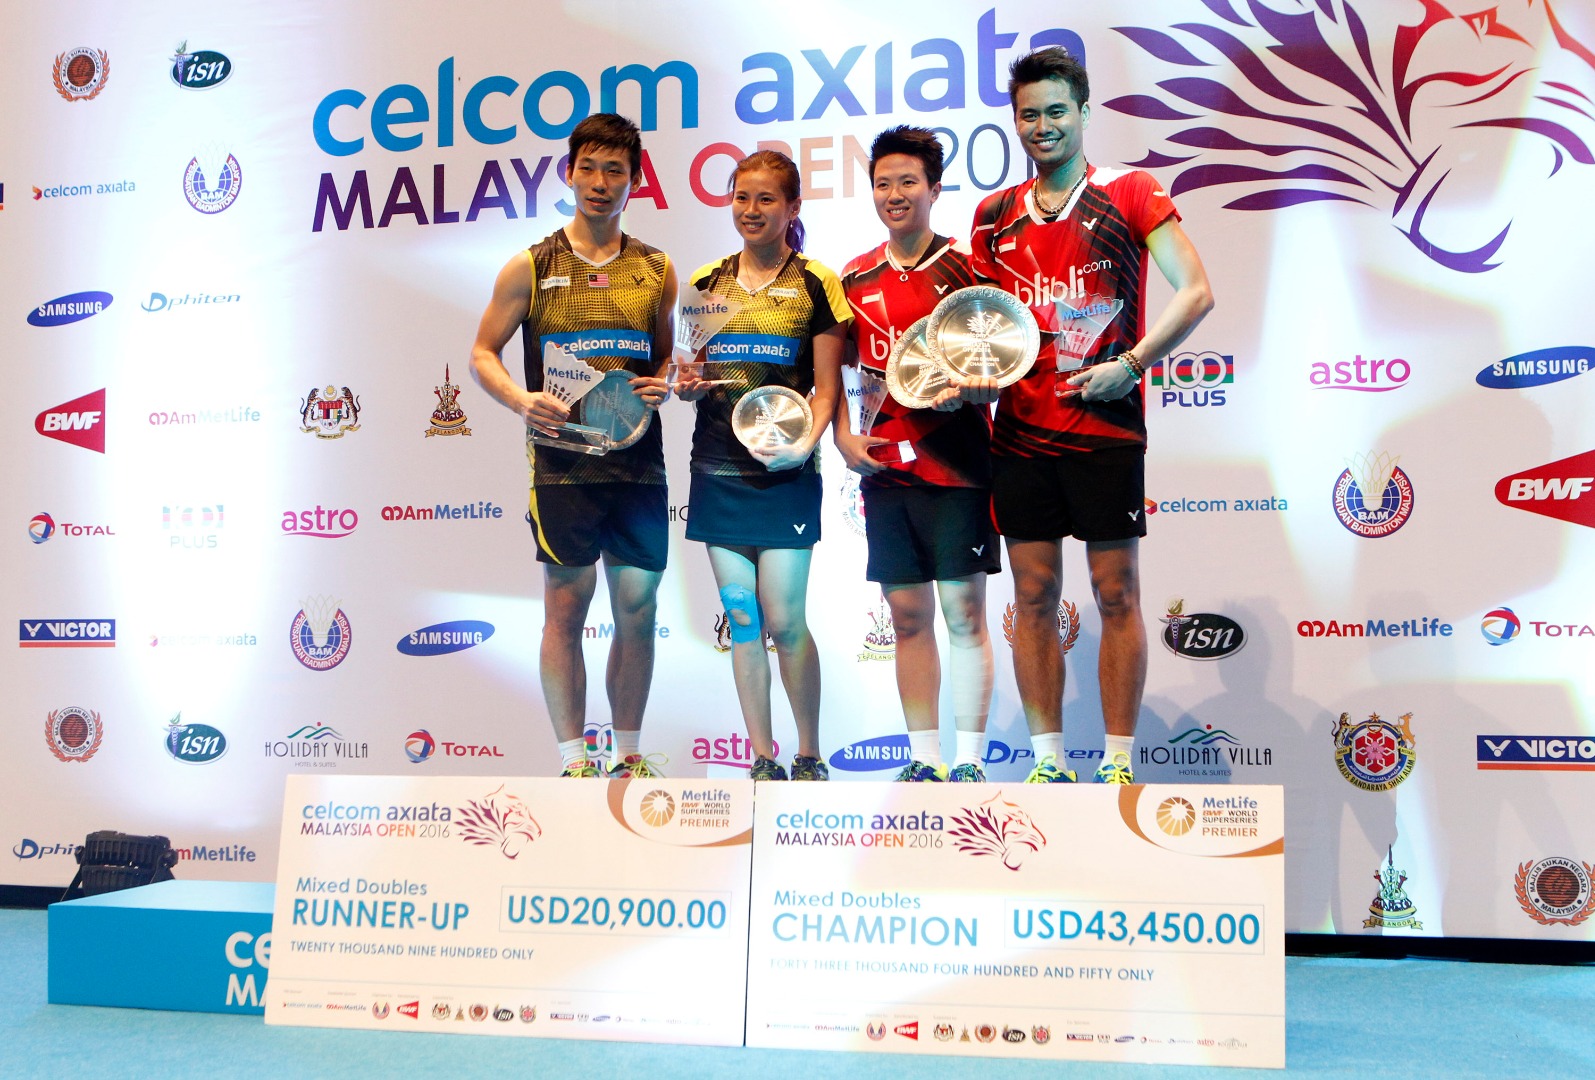 bwf malaysia open 2016 results